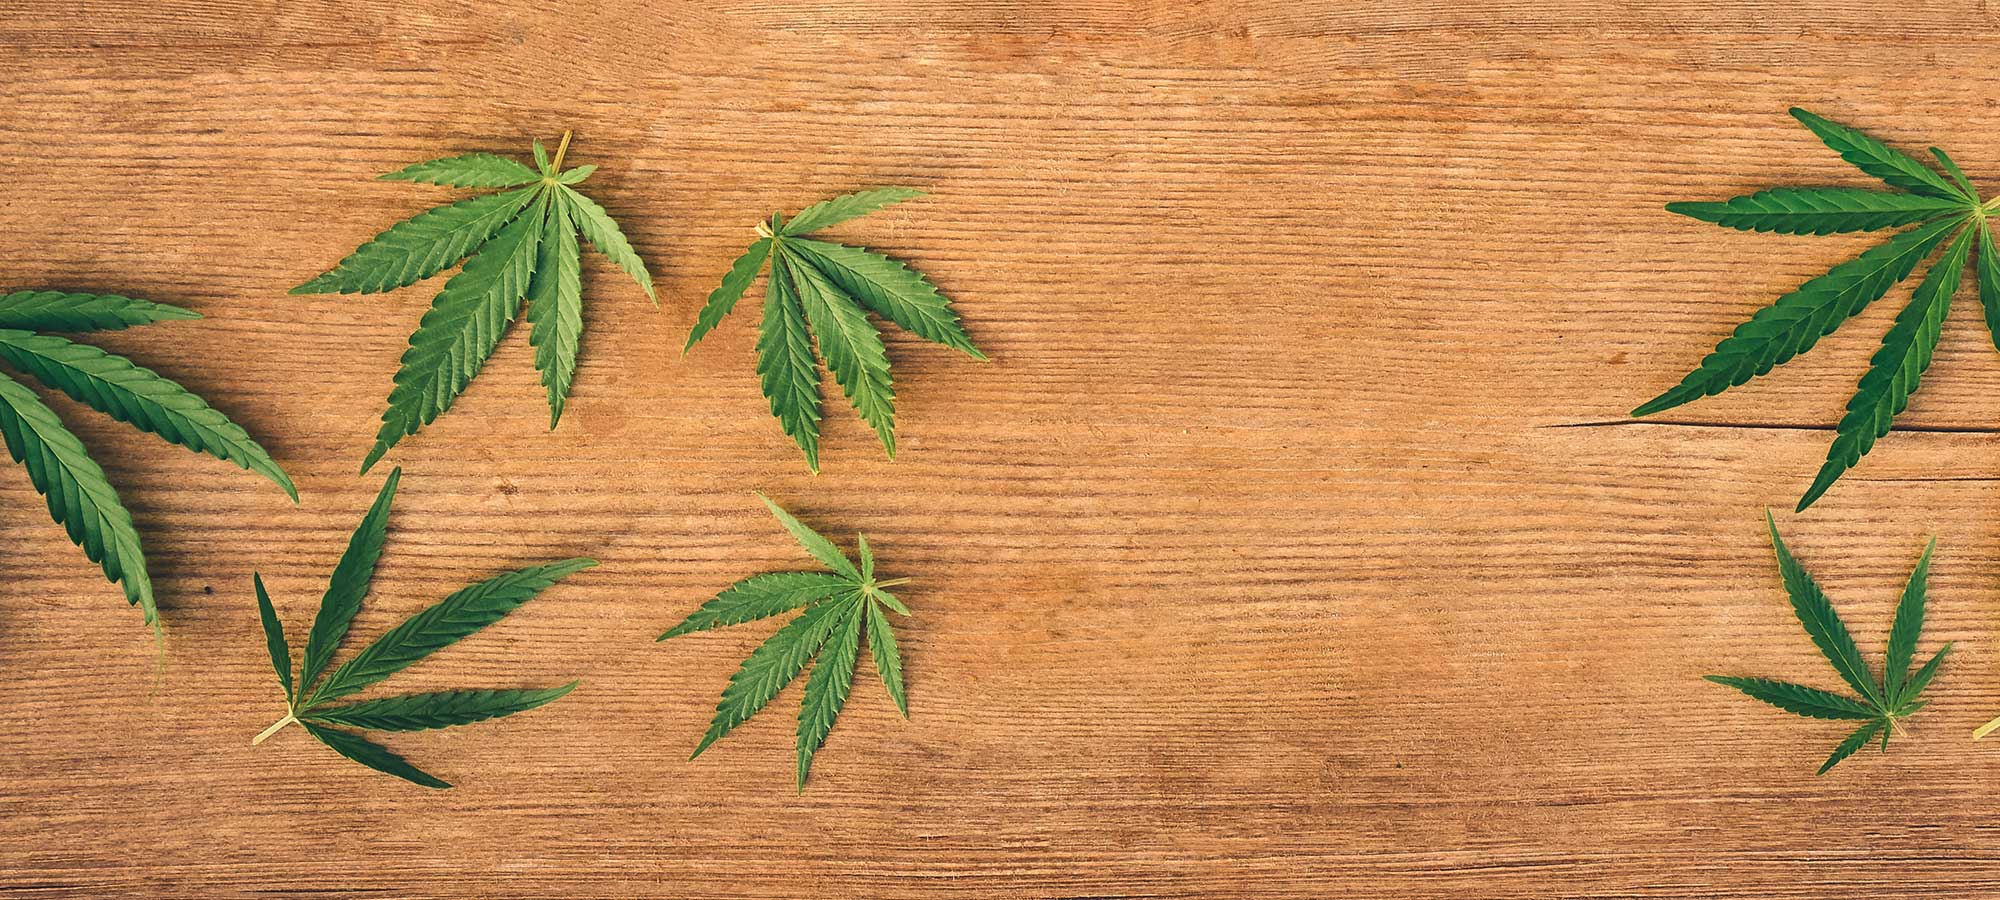 demand of cannabis after legalization